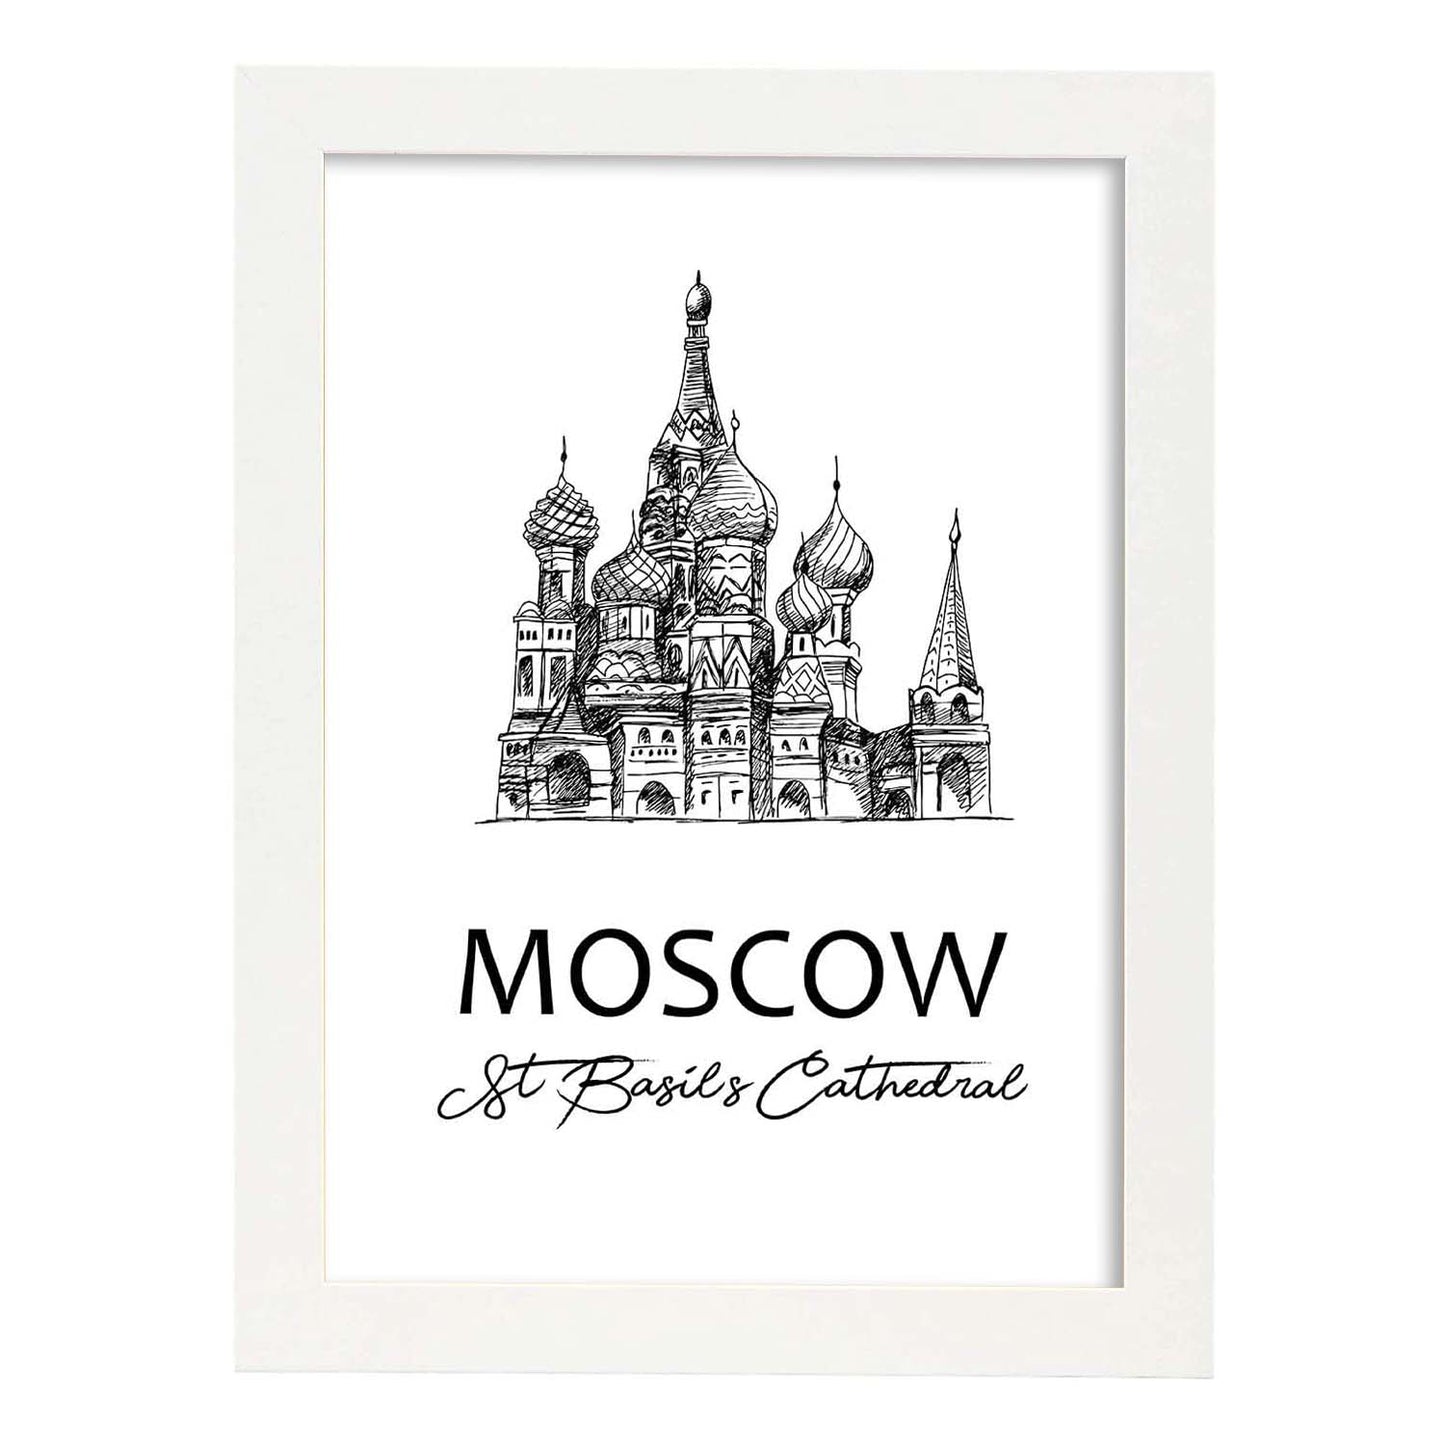 Poster de Moscú - Catedral de San Basilio. Láminas con monumentos de ciudades.-Artwork-Nacnic-A4-Marco Blanco-Nacnic Estudio SL